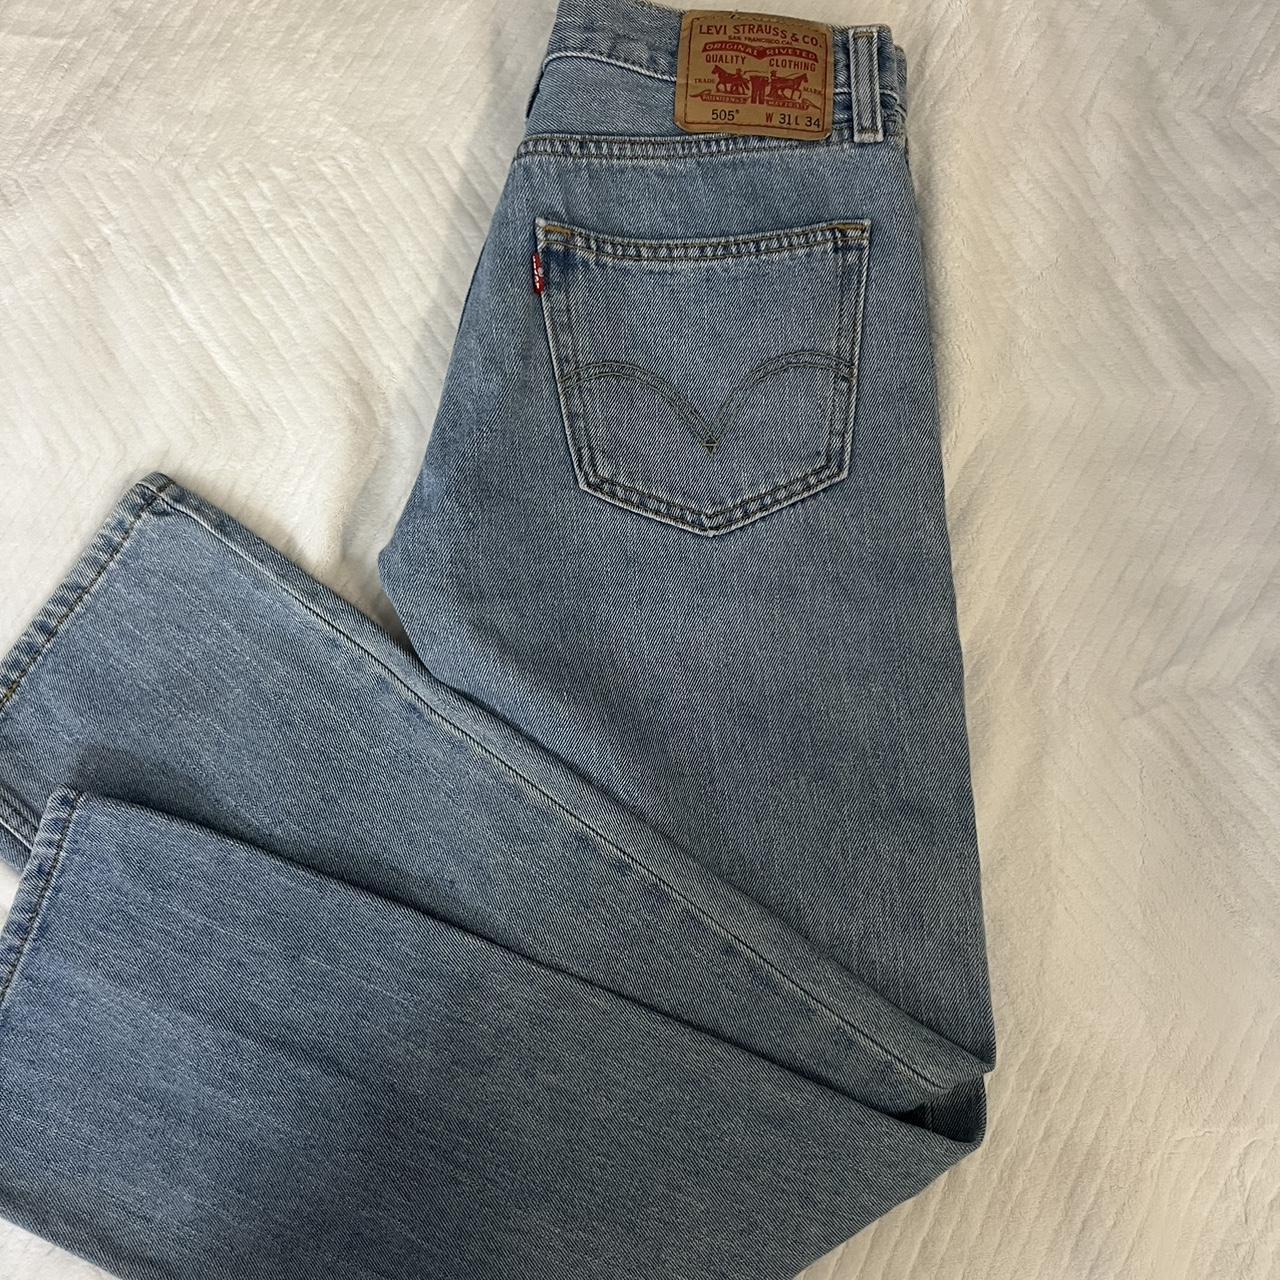 Levi’s 505 Straight Fit Light Wash Vintage Jeans... - Depop